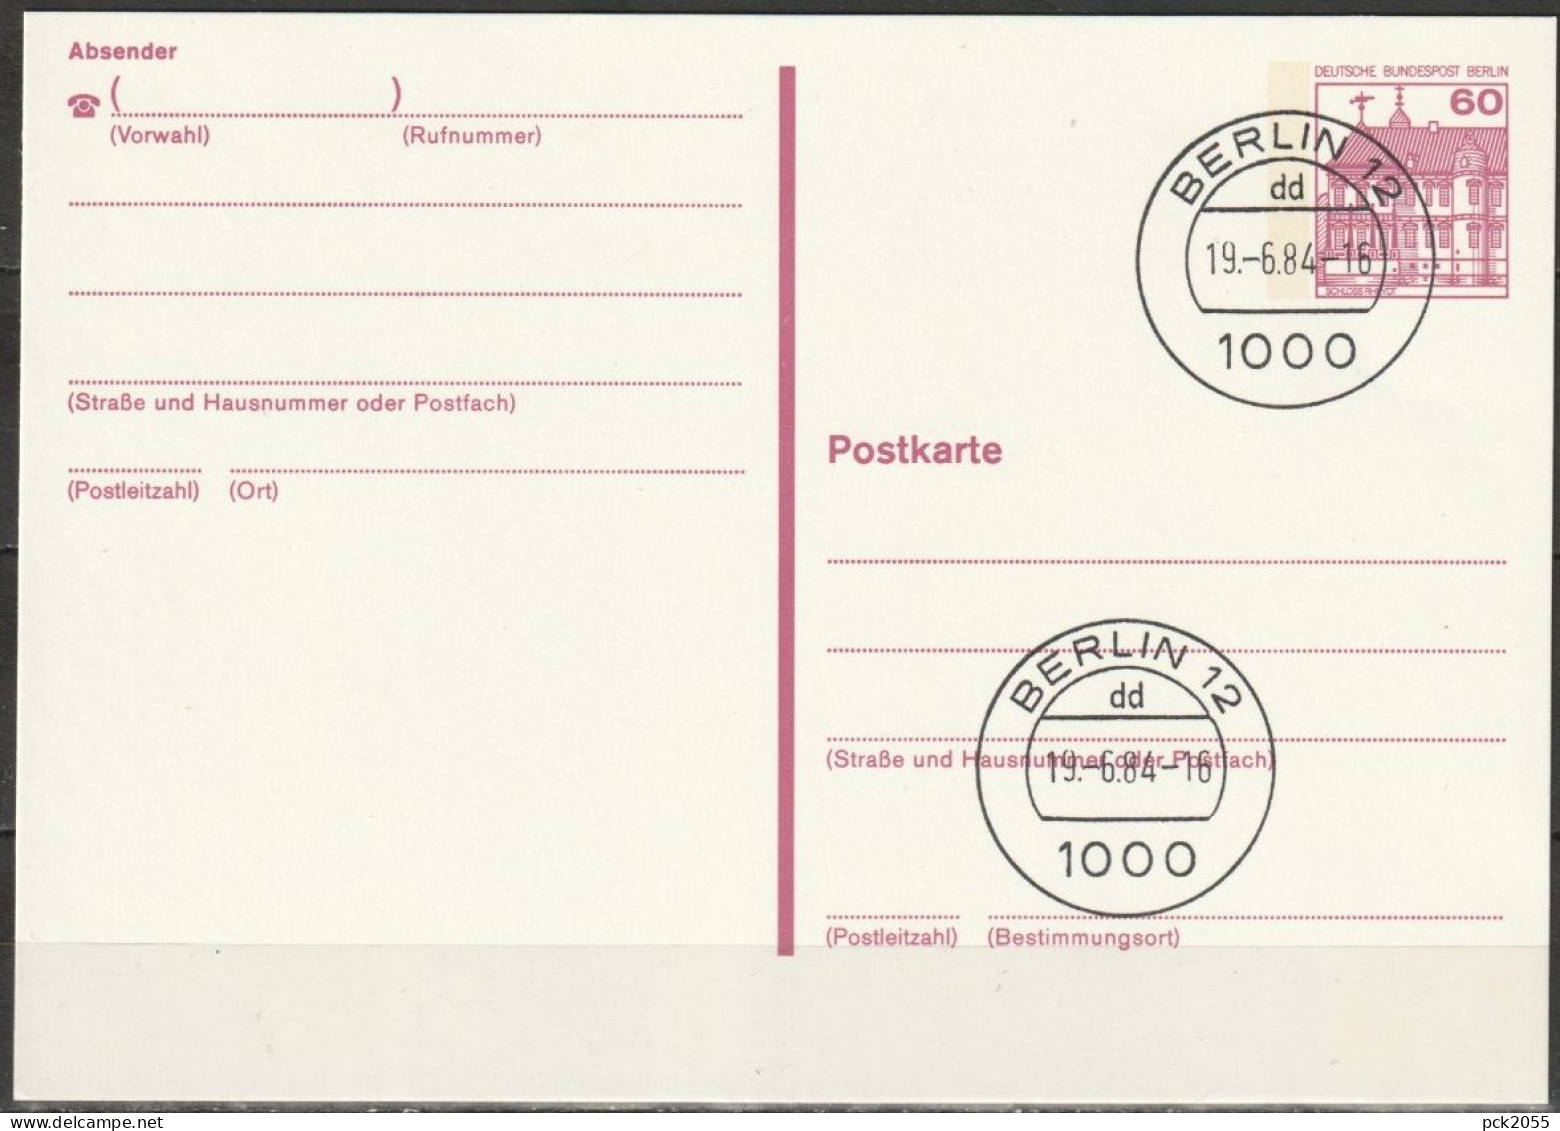 Berlin Ganzsache 1984 Mi.-Nr. P122 II Tagesstempel BERLIN 12  19.6.84  ( PK 460 ) - Postcards - Used